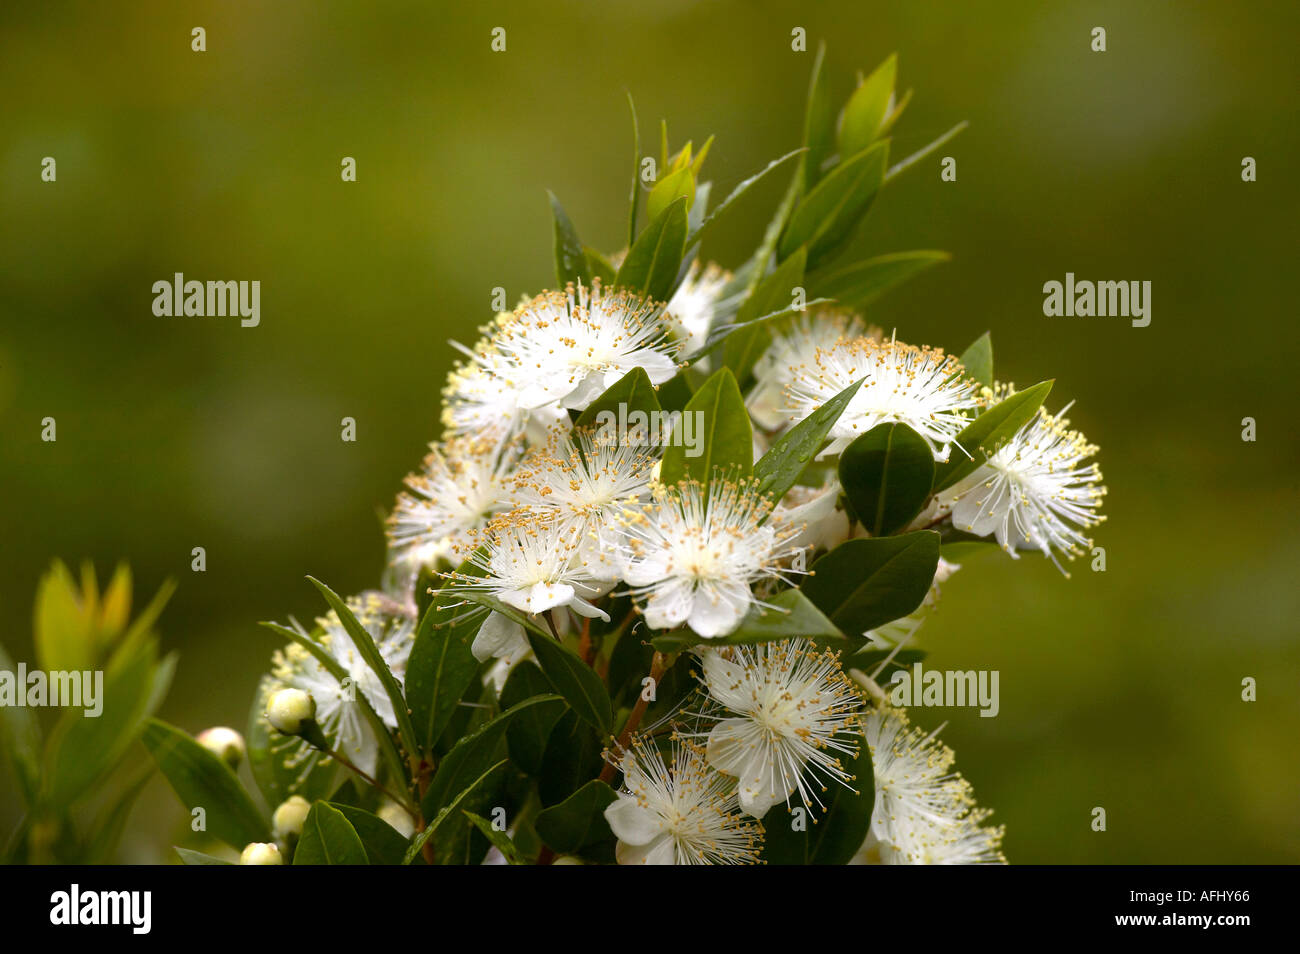 Common Myrtle shrub (Myrtus communis) in flower against a blurred background Stock Photo